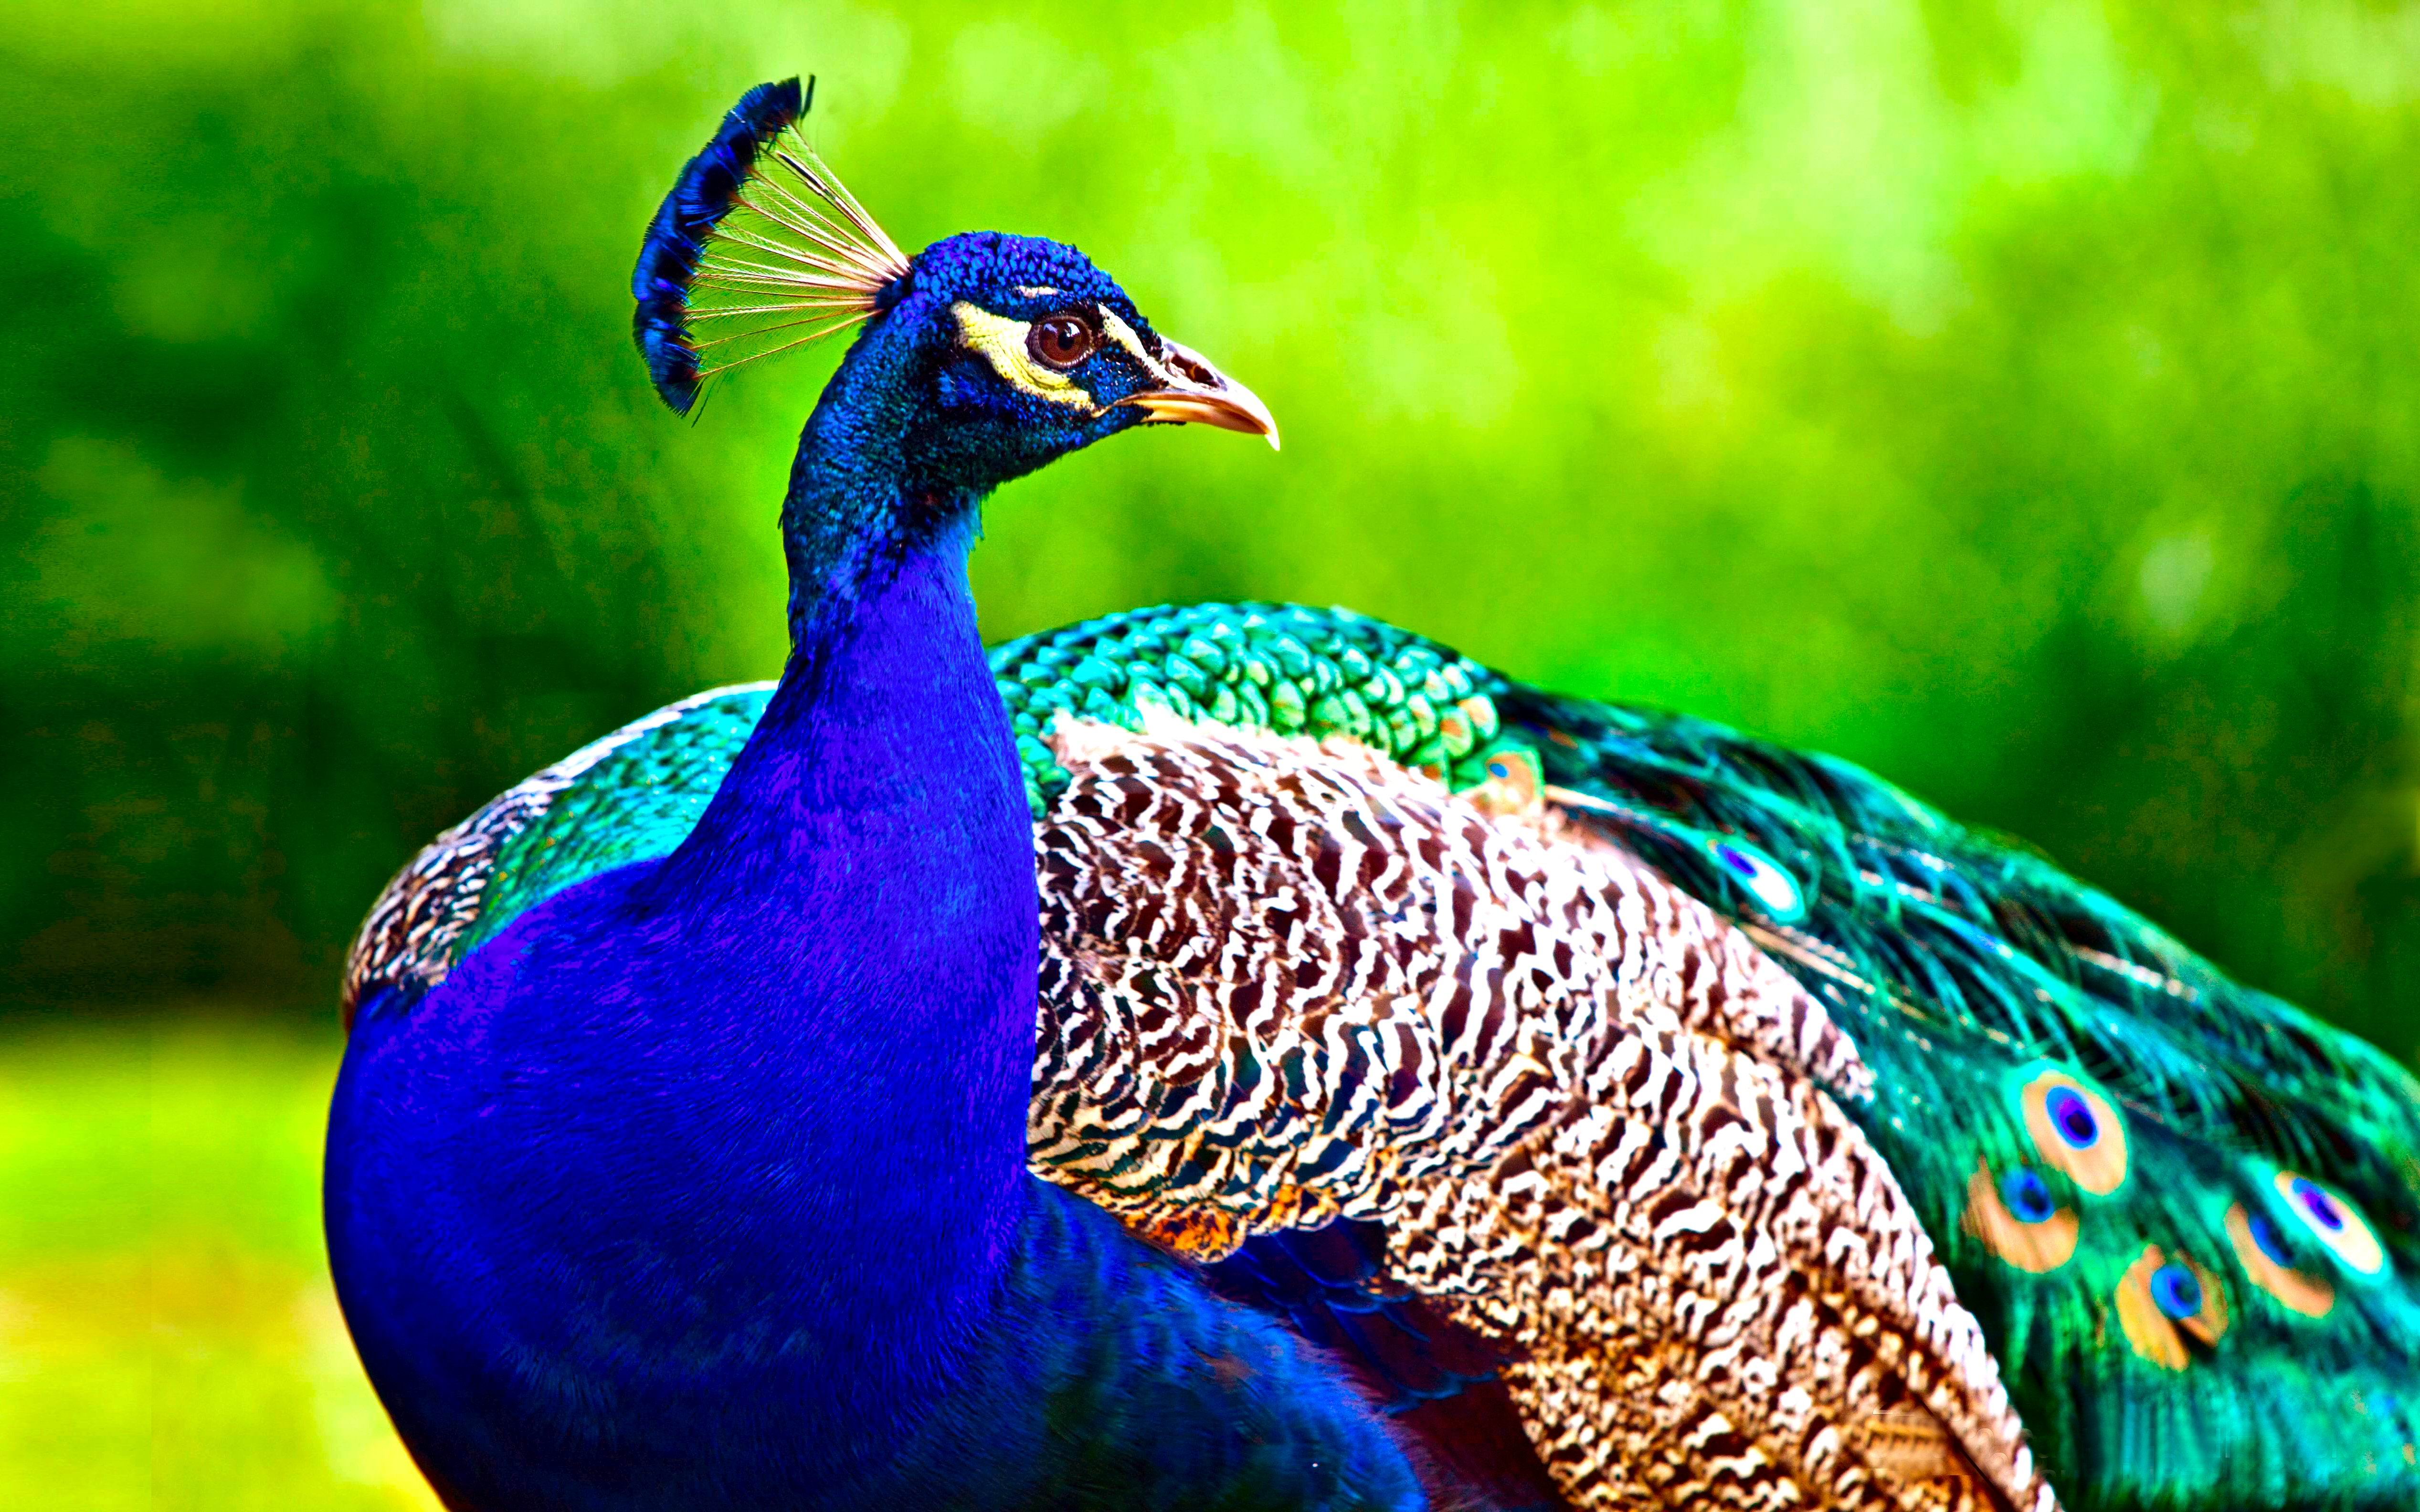 Peacock 4k Ultra HD Wallpaper